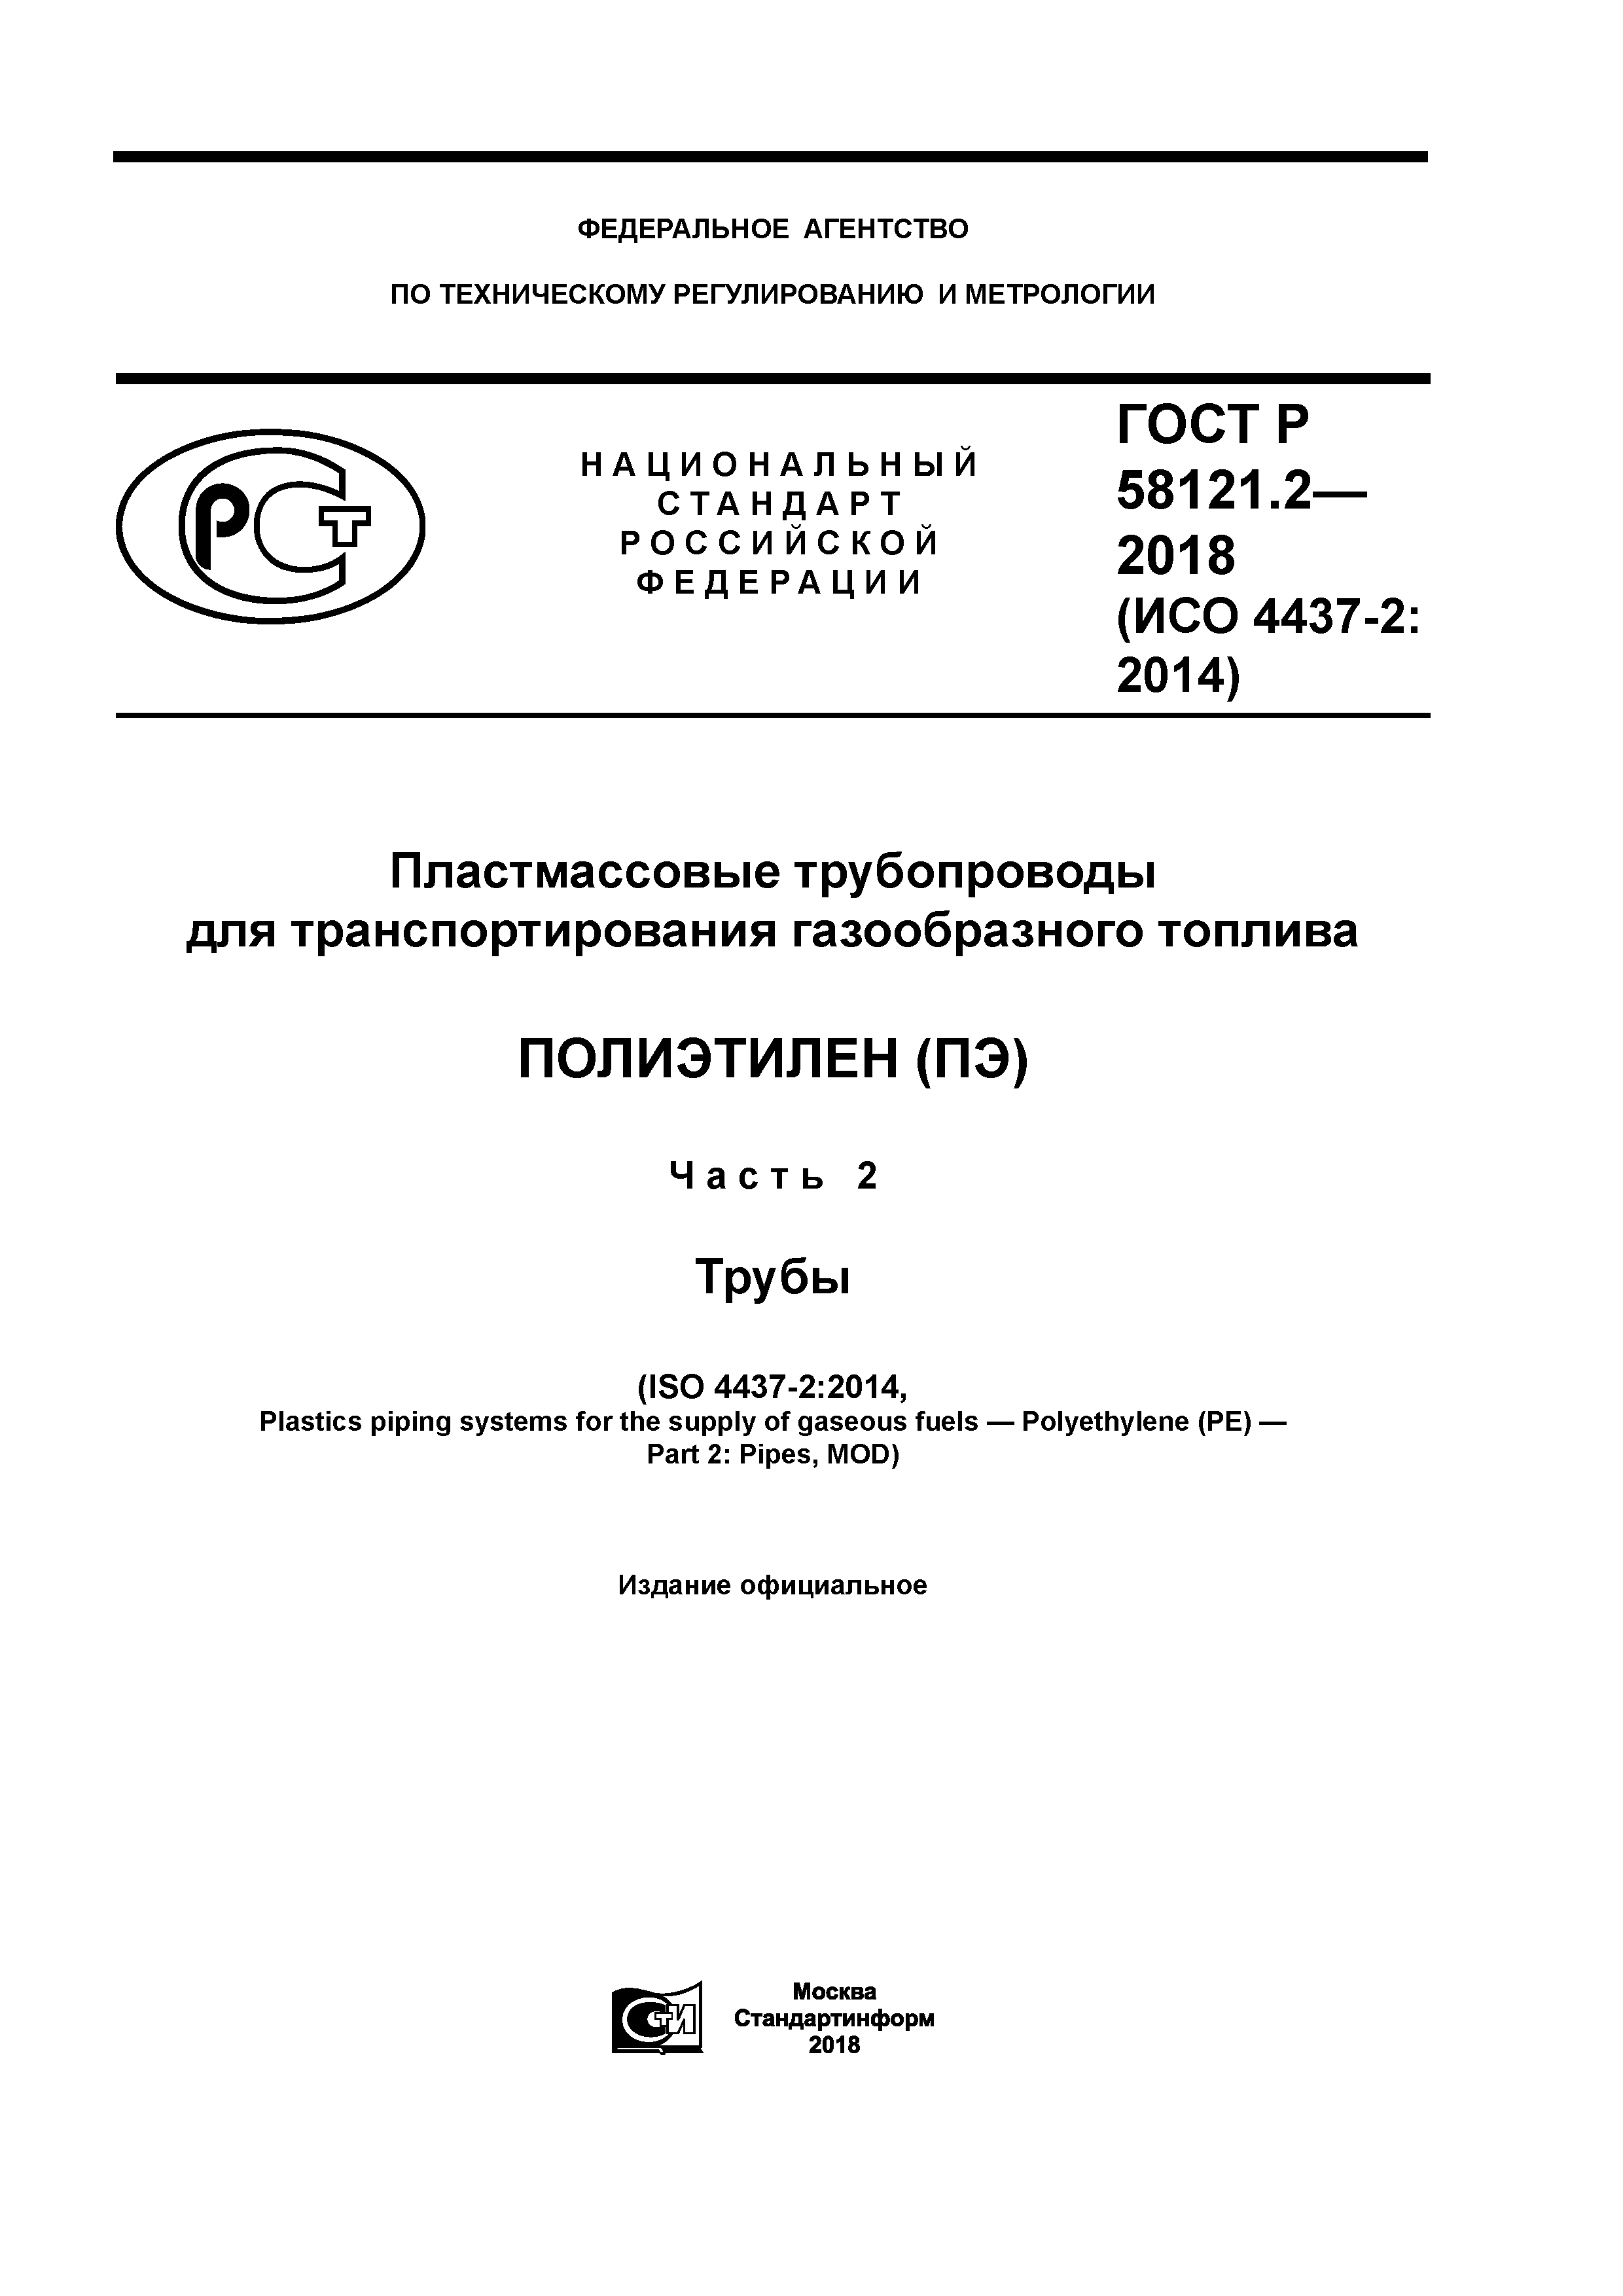 ГОСТ Р 58121.2-2018